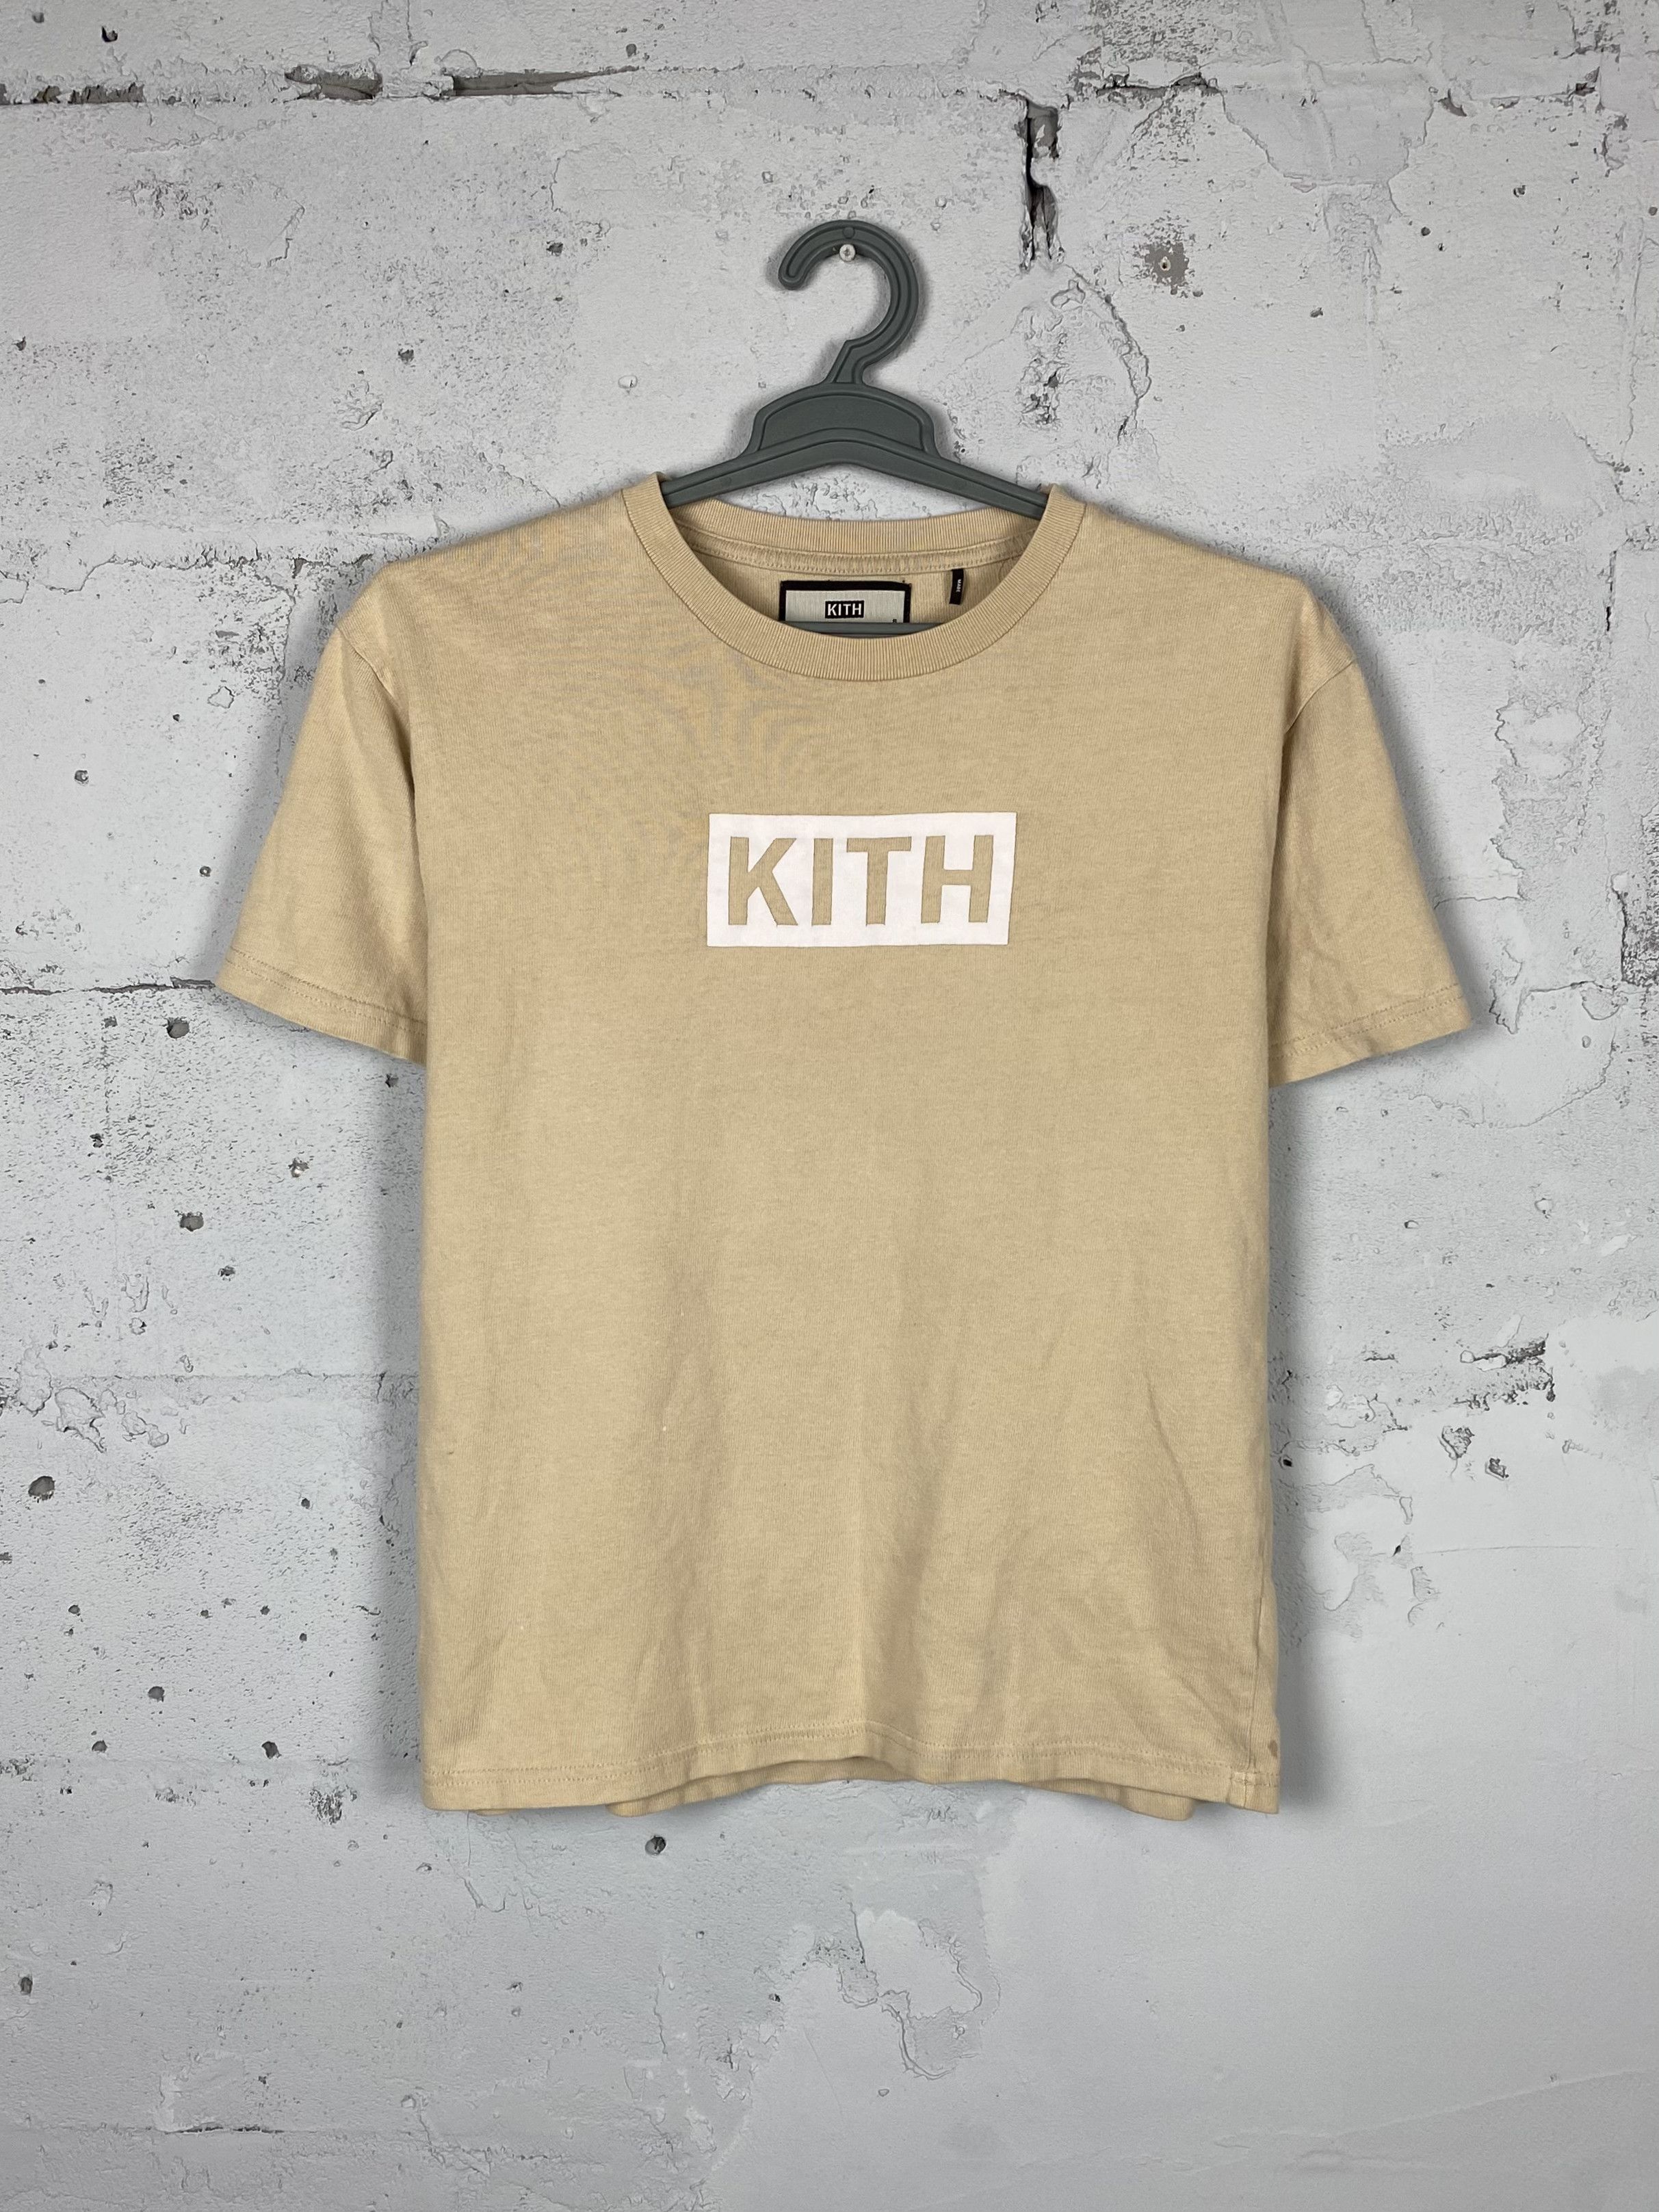 Kith Kith Box Logo Summer T-Shirt Tan Size M | Grailed